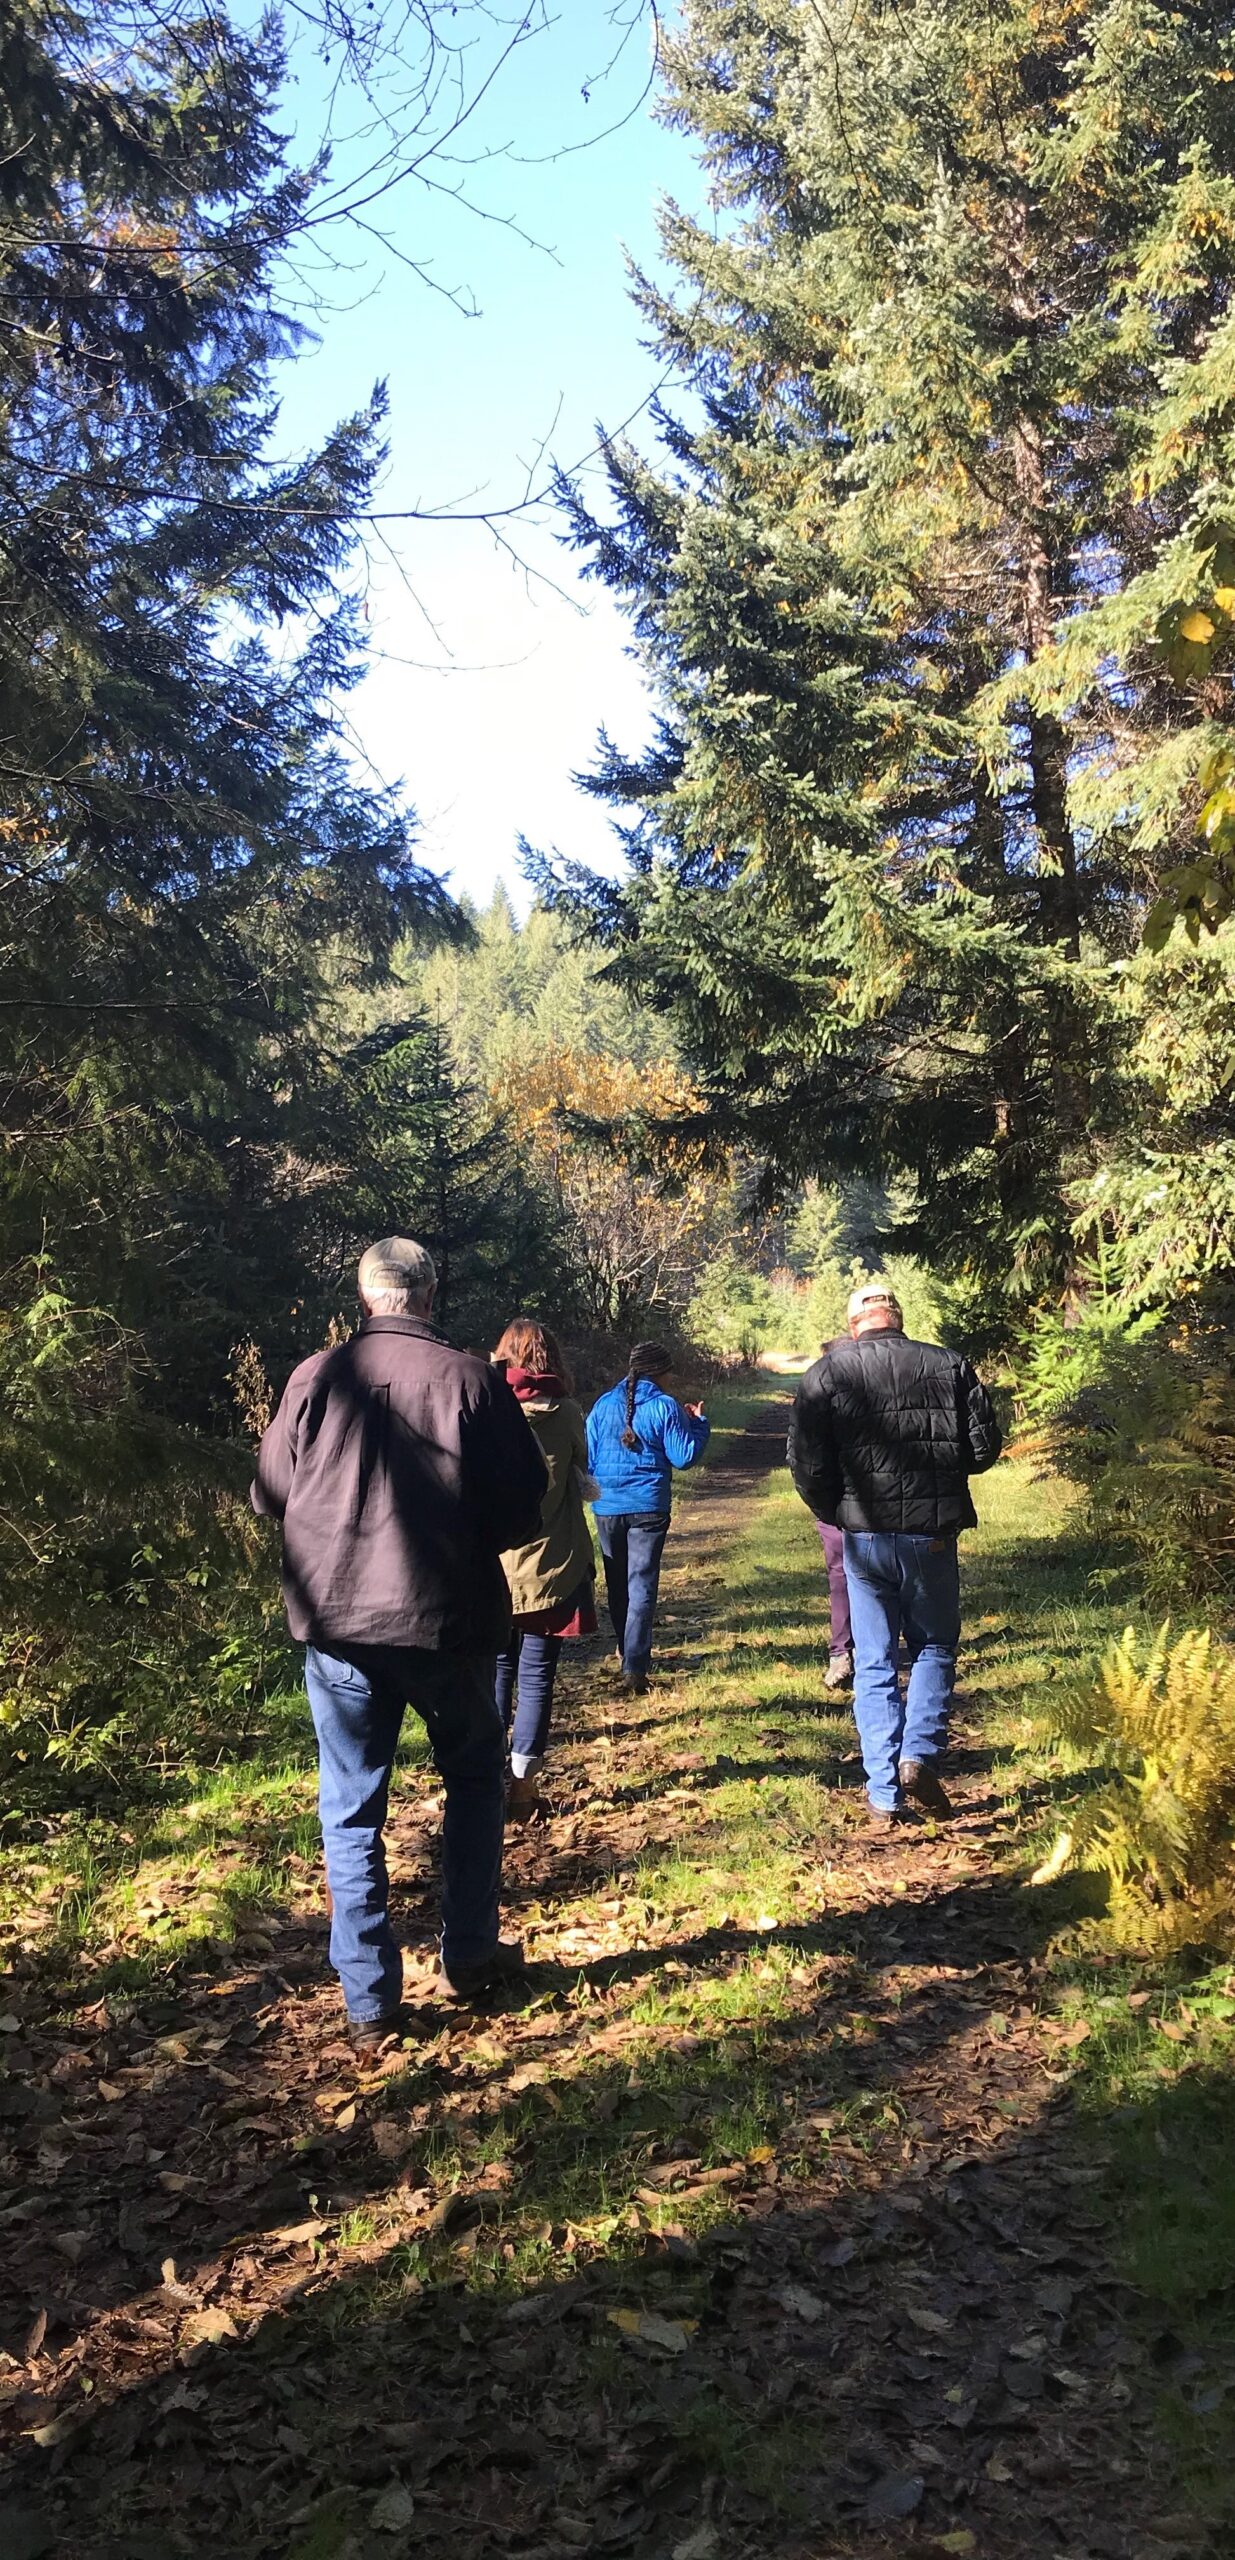 BLA members walking through the woods